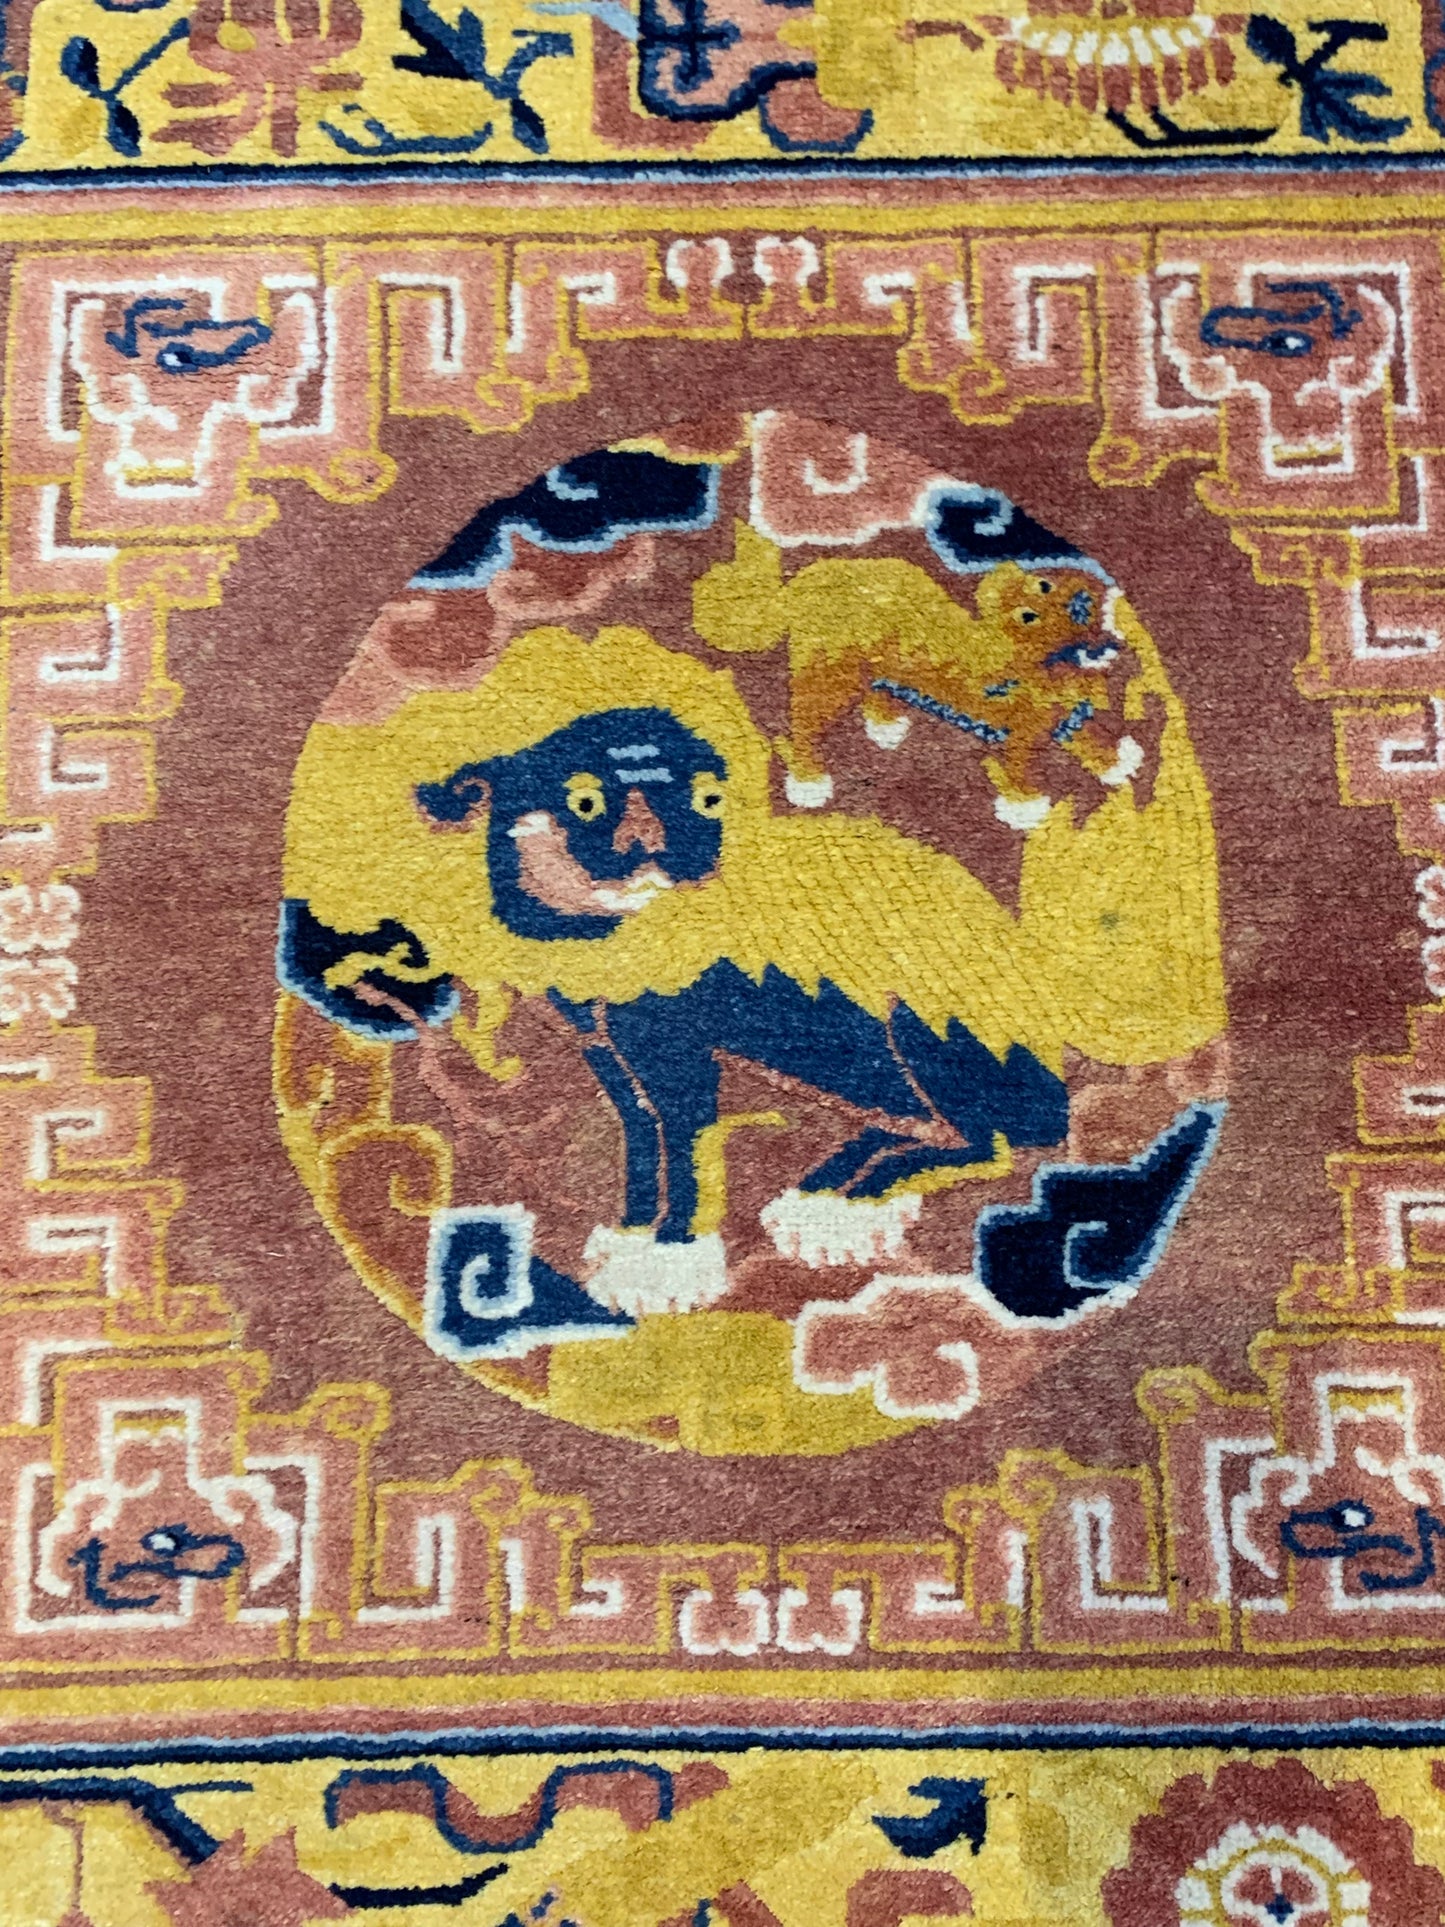 Antique Chinese FU dog design rug